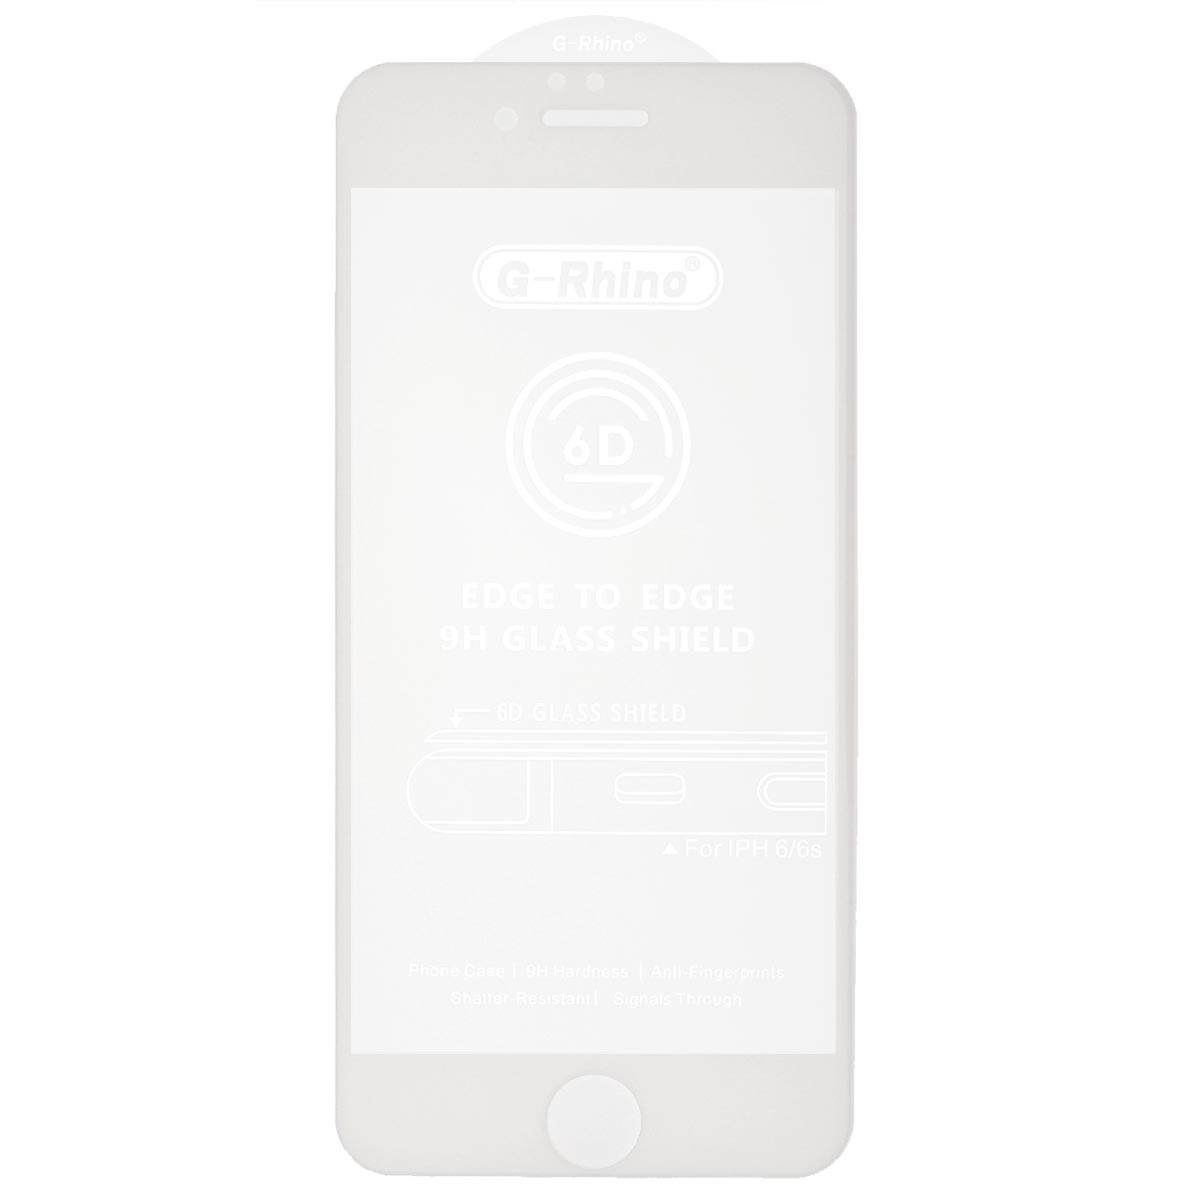 Защитное стекло 6D G-Rhino для APPLE iPhone 6, iPhone 6G, iPhone 6S, цвет окантовки белый